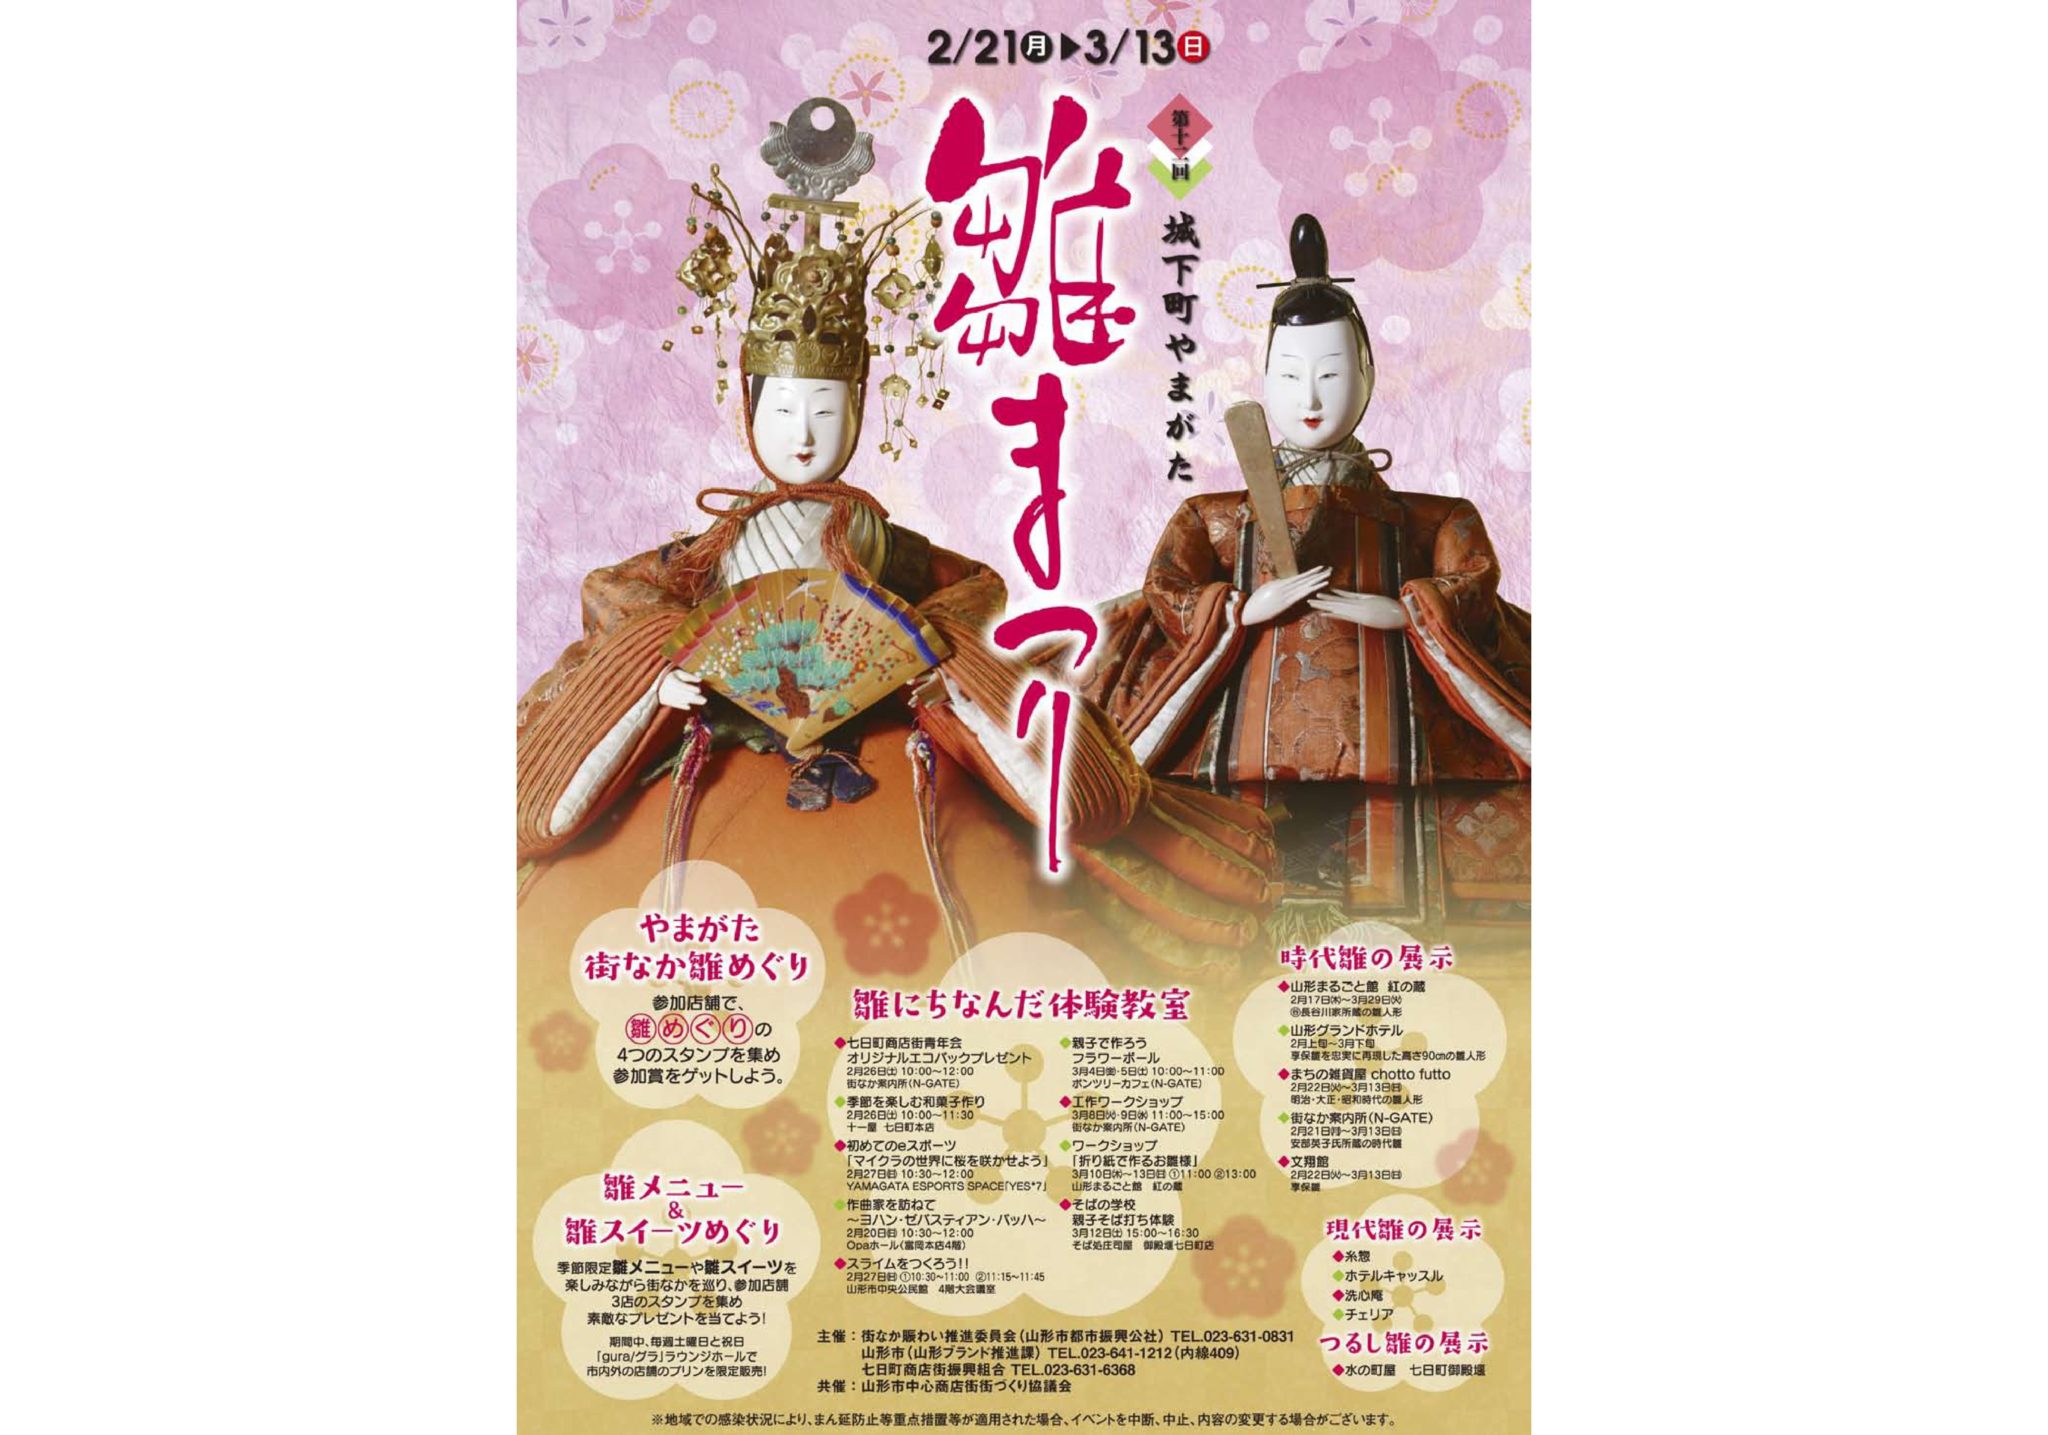 Castle Town Yamagata Hina Doll Festival